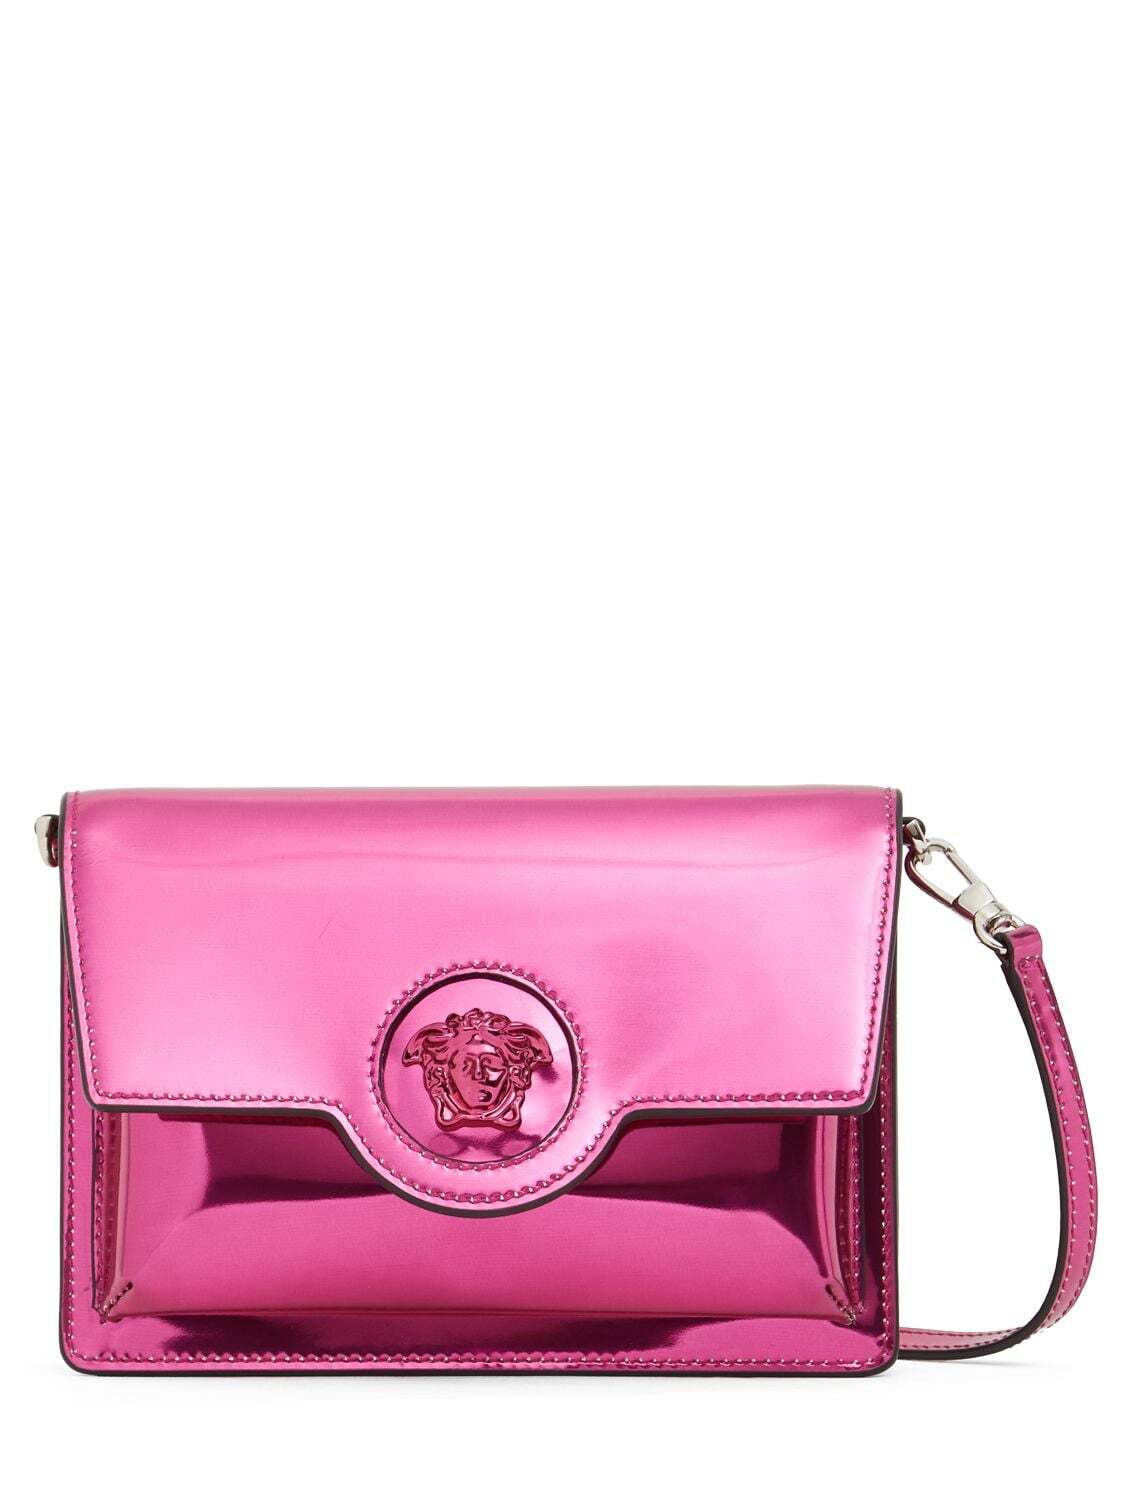 VERSACE Mini Leather Shoulder Bag in pink